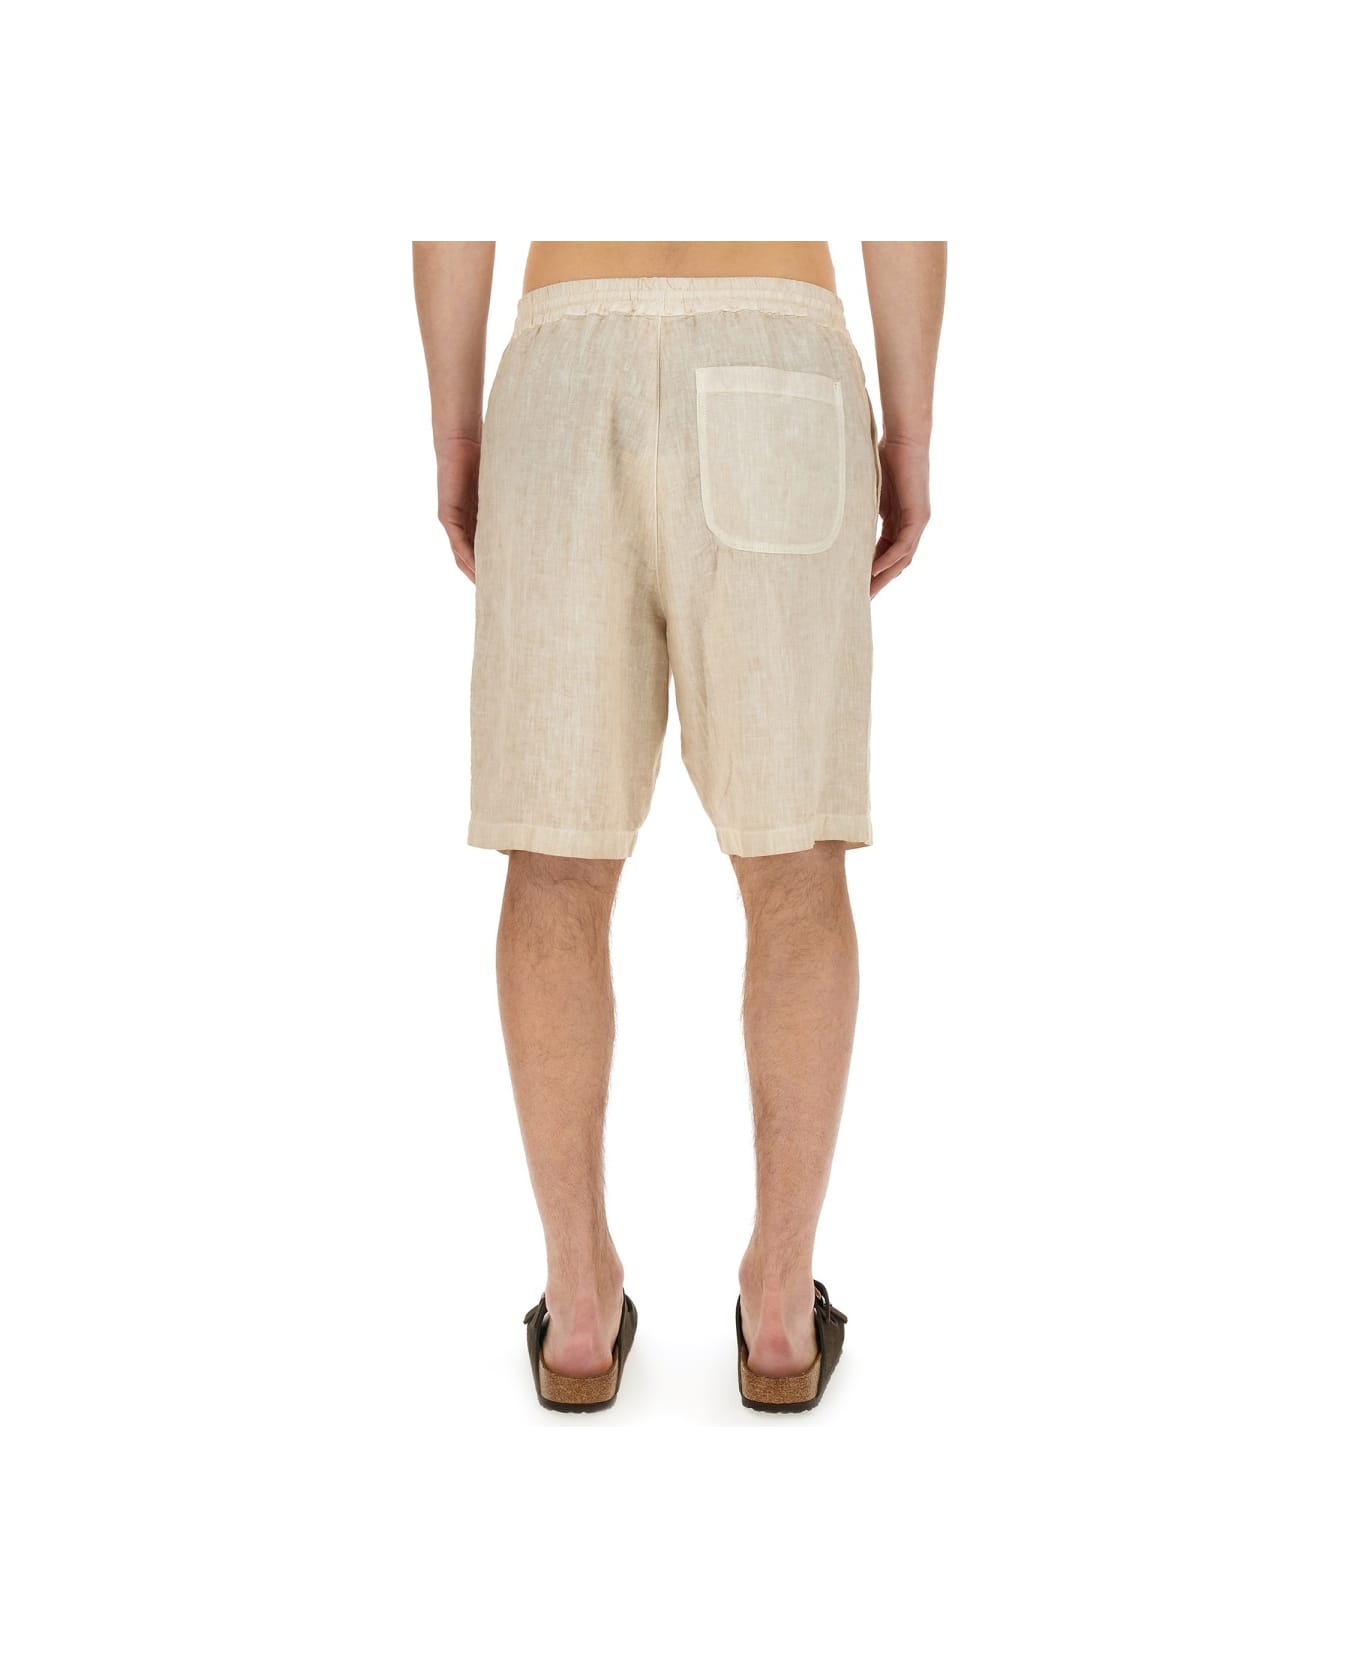 120% Lino Linen Bermuda Shorts - IVORY ショートパンツ